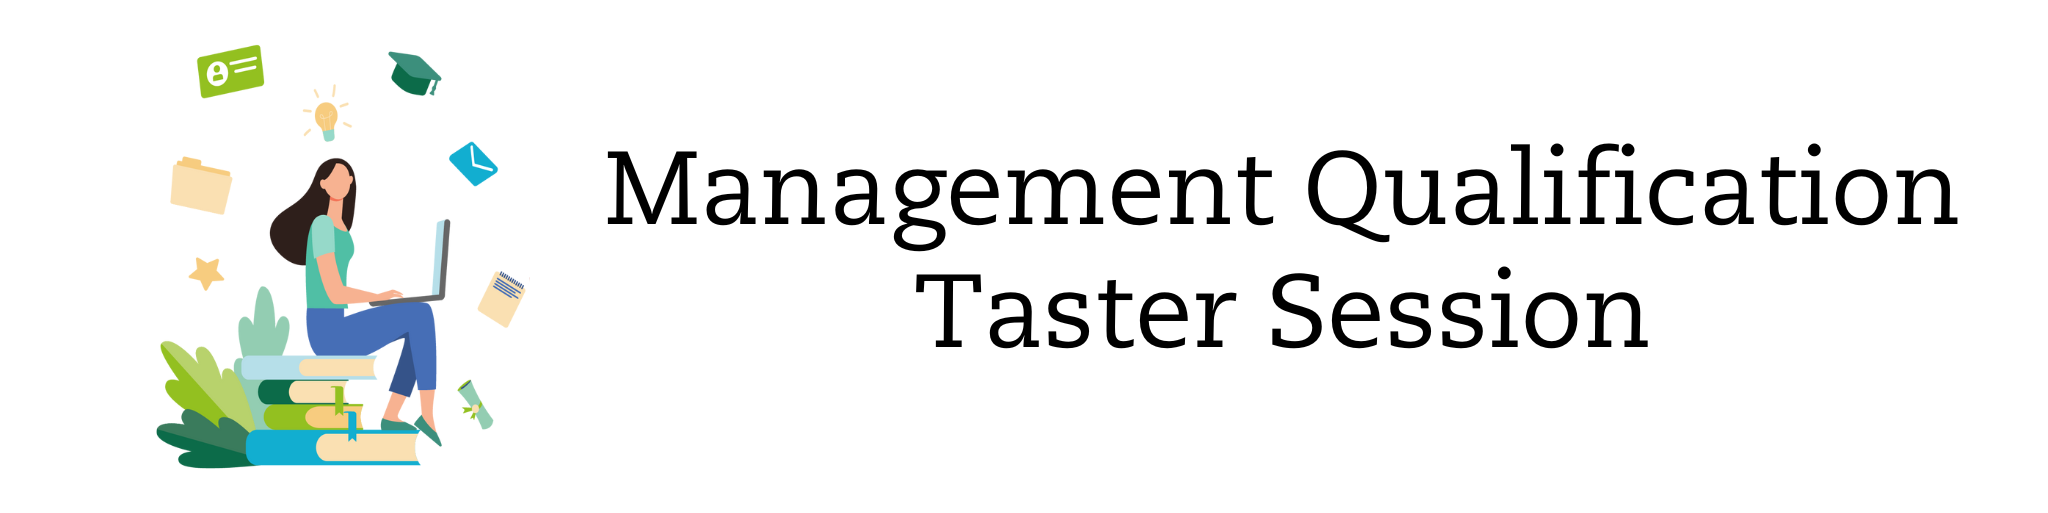 Management Qualification Taster Session